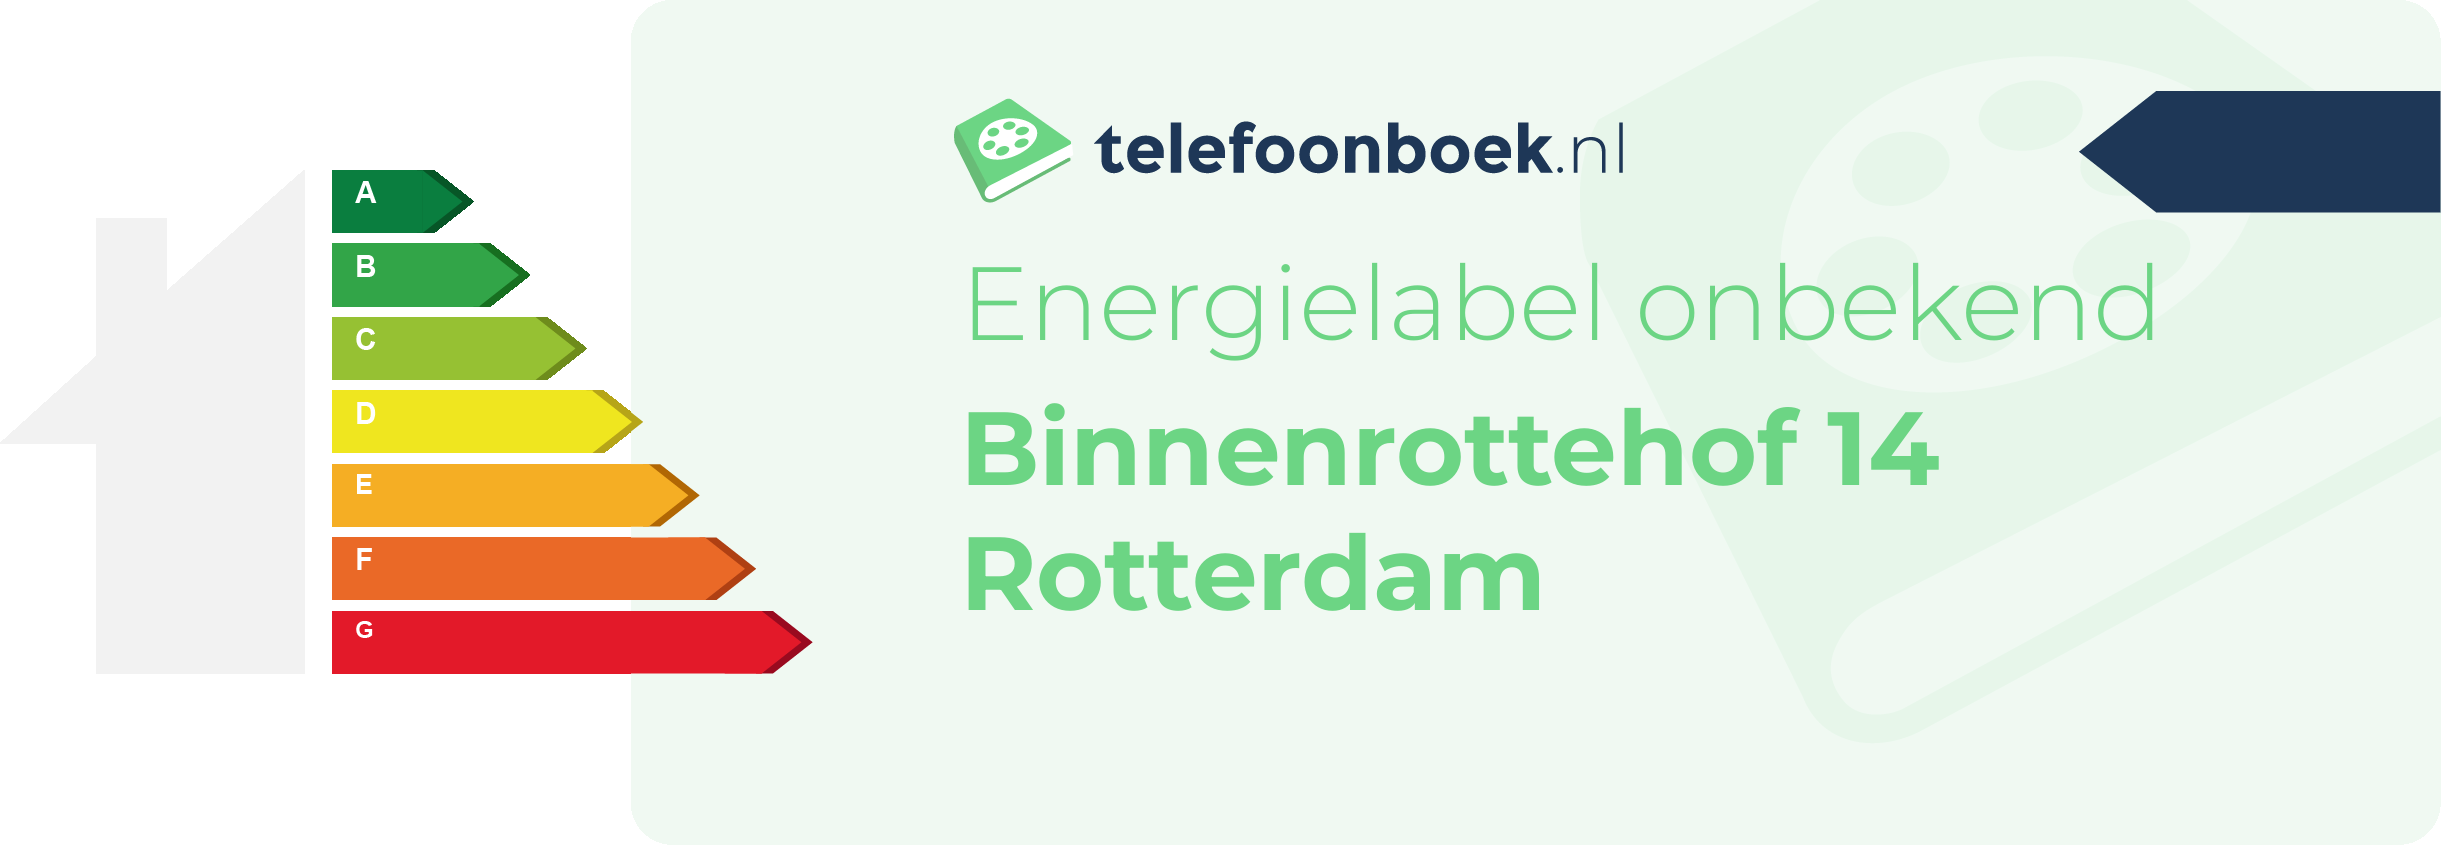 Energielabel Binnenrottehof 14 Rotterdam